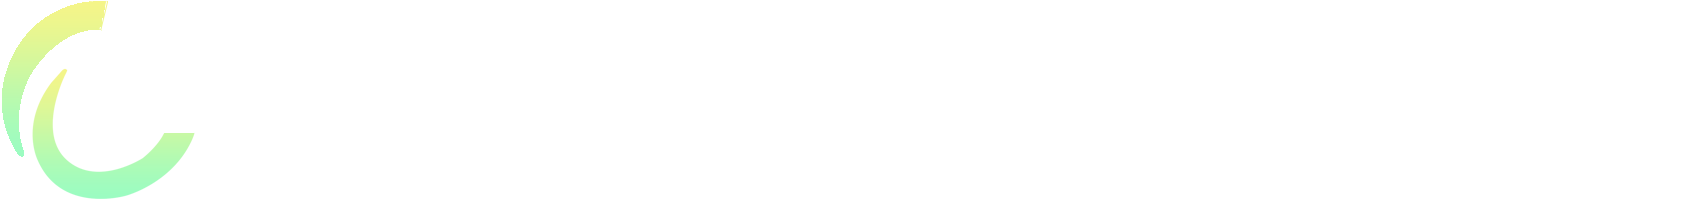 iTennisLadder logo